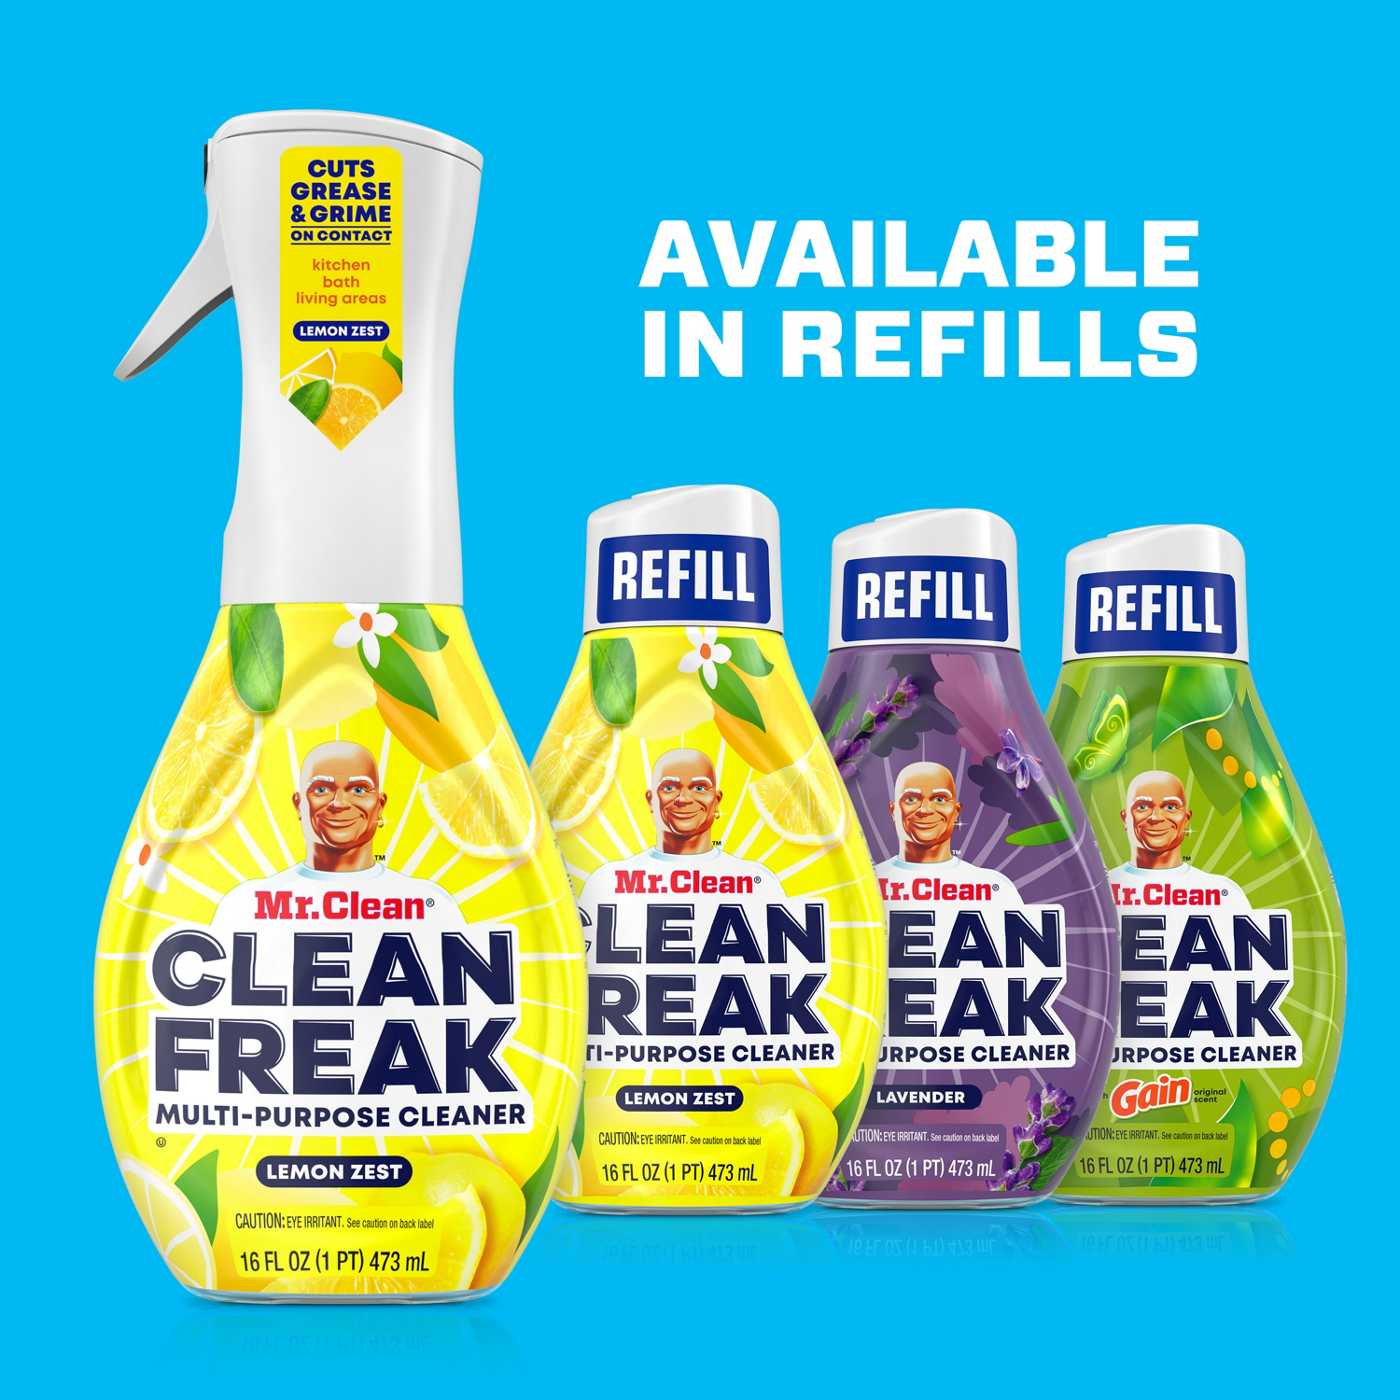 Mr. Clean Clean Freak Deep Cleaning Mist Multi-Surface Spray